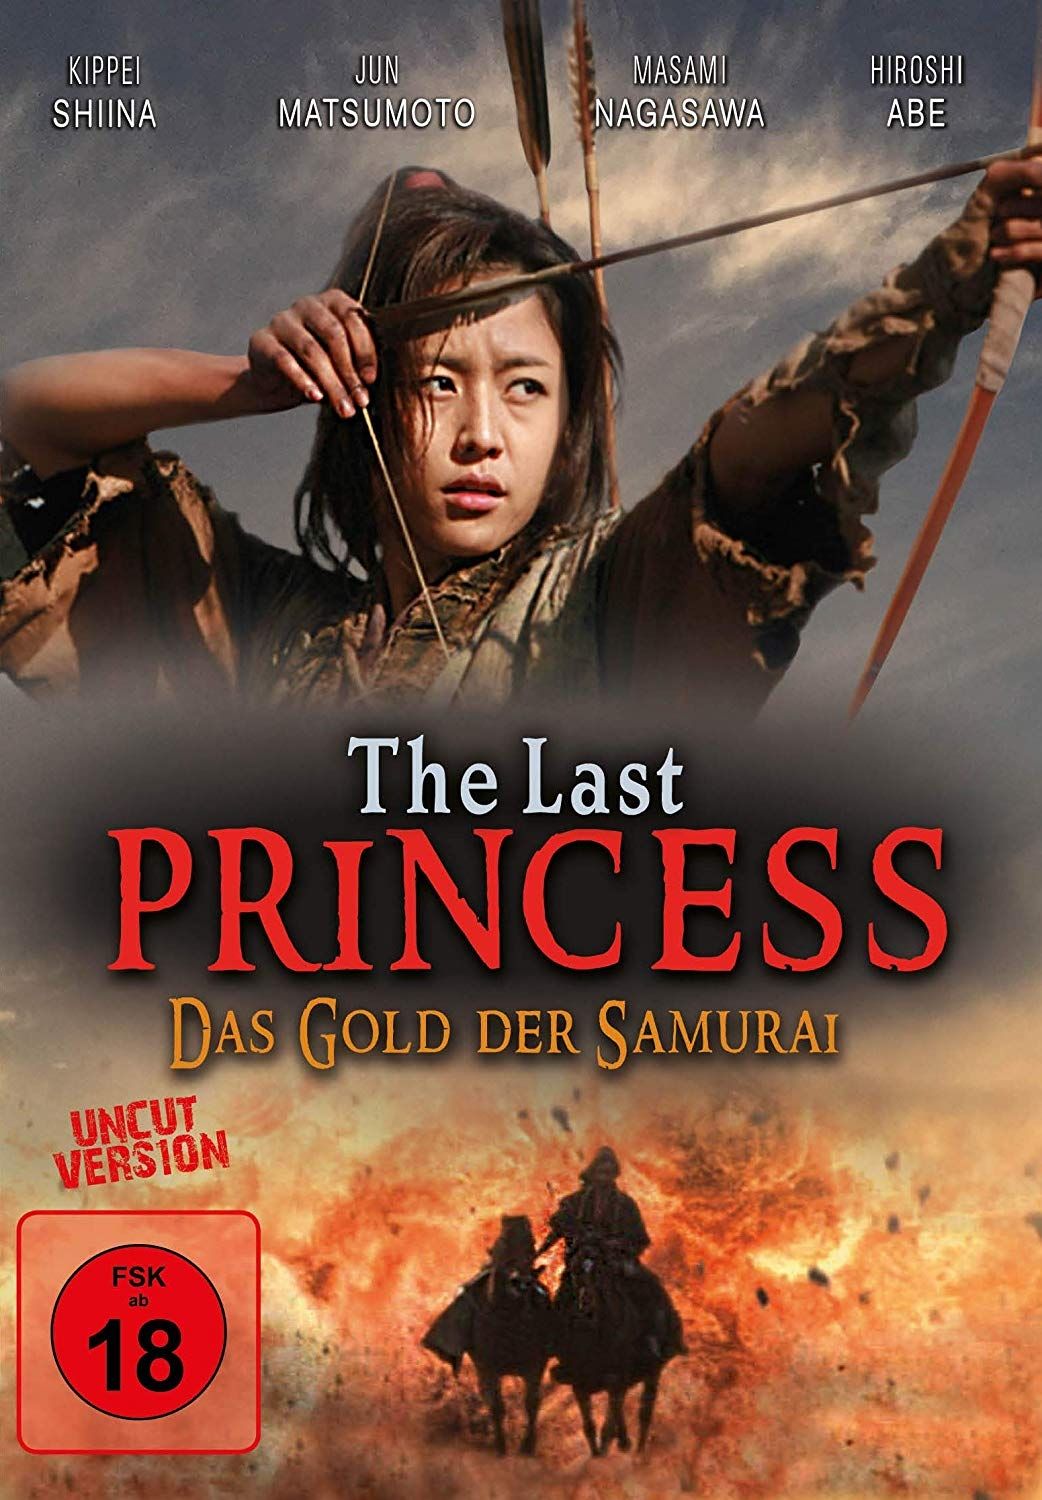 Last Princess, The - Das Gold der Samurai (Uncut)